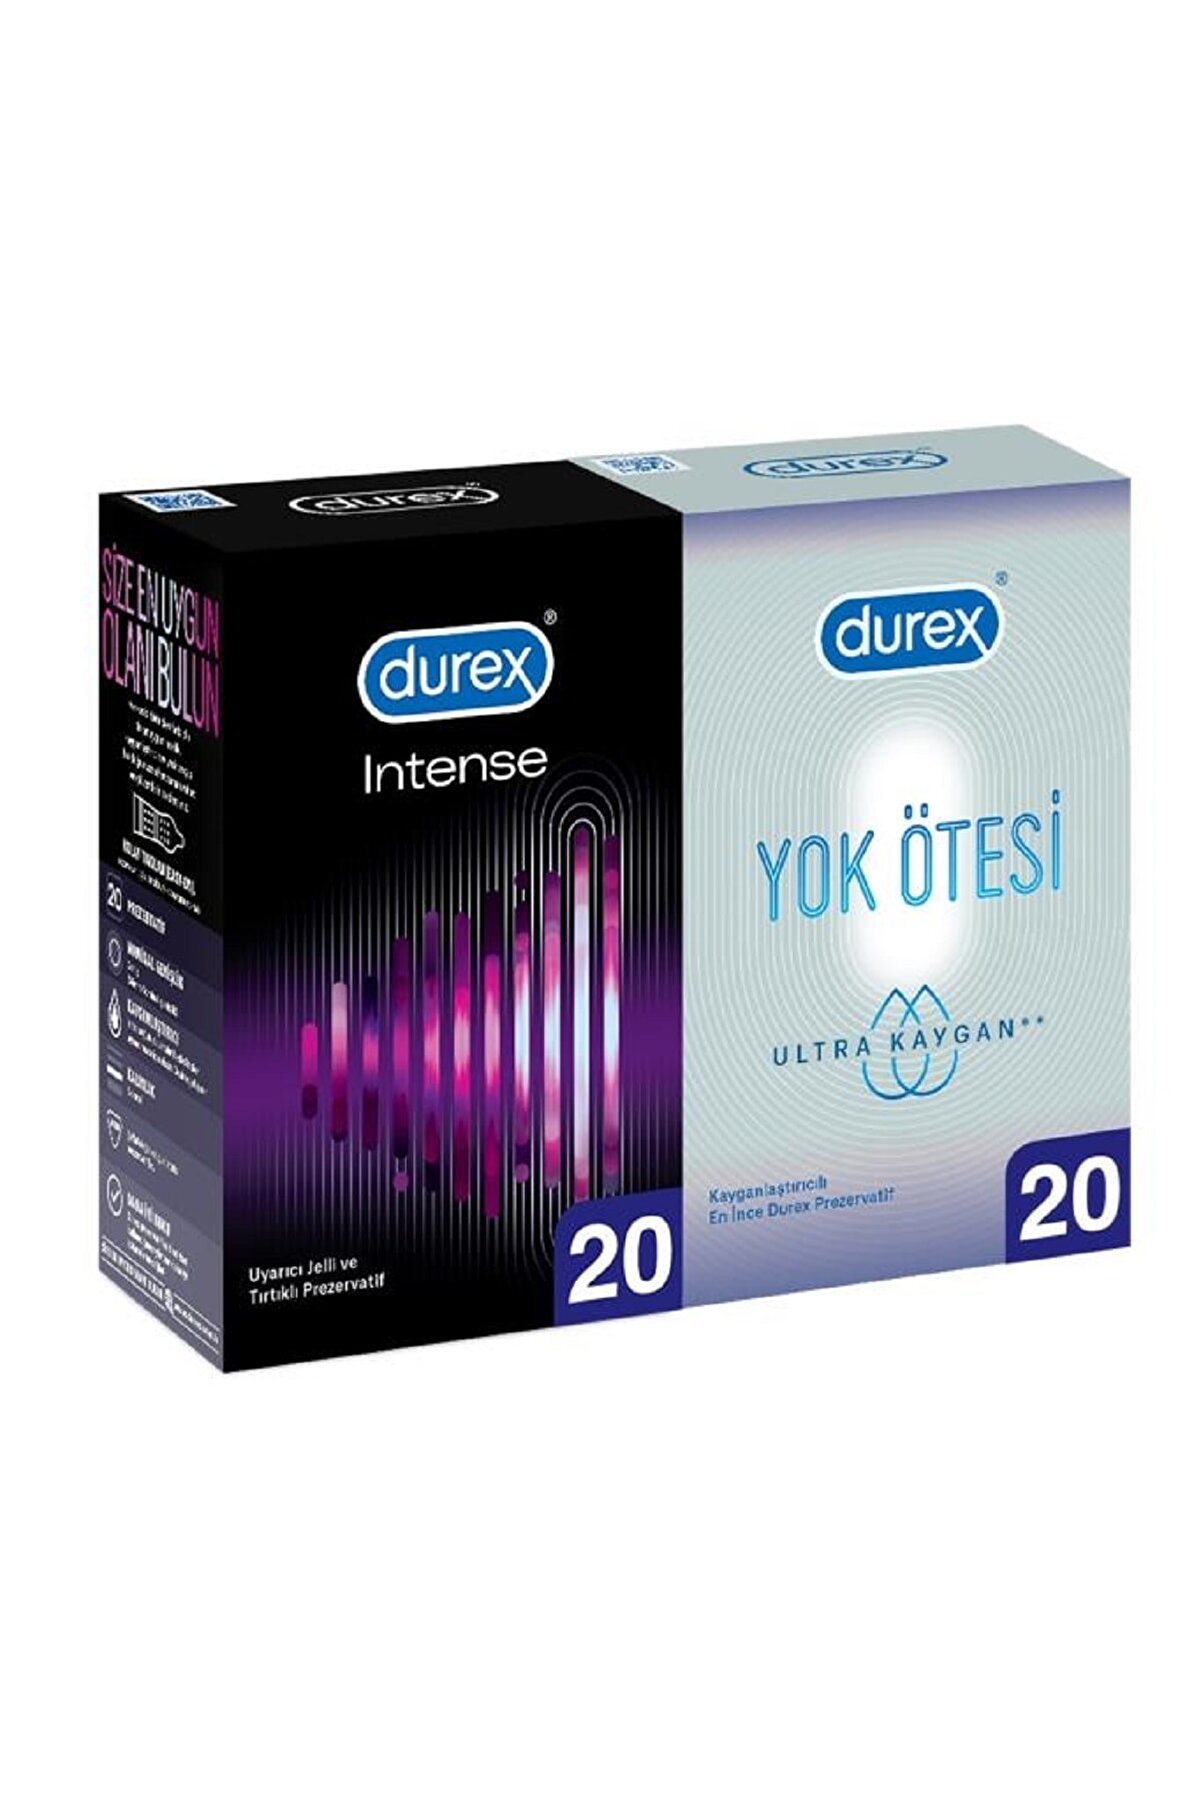 Durex Intense Prezervatif 20'li + Yok Ötesi Ultra Kaygan Prezervatif 20’li